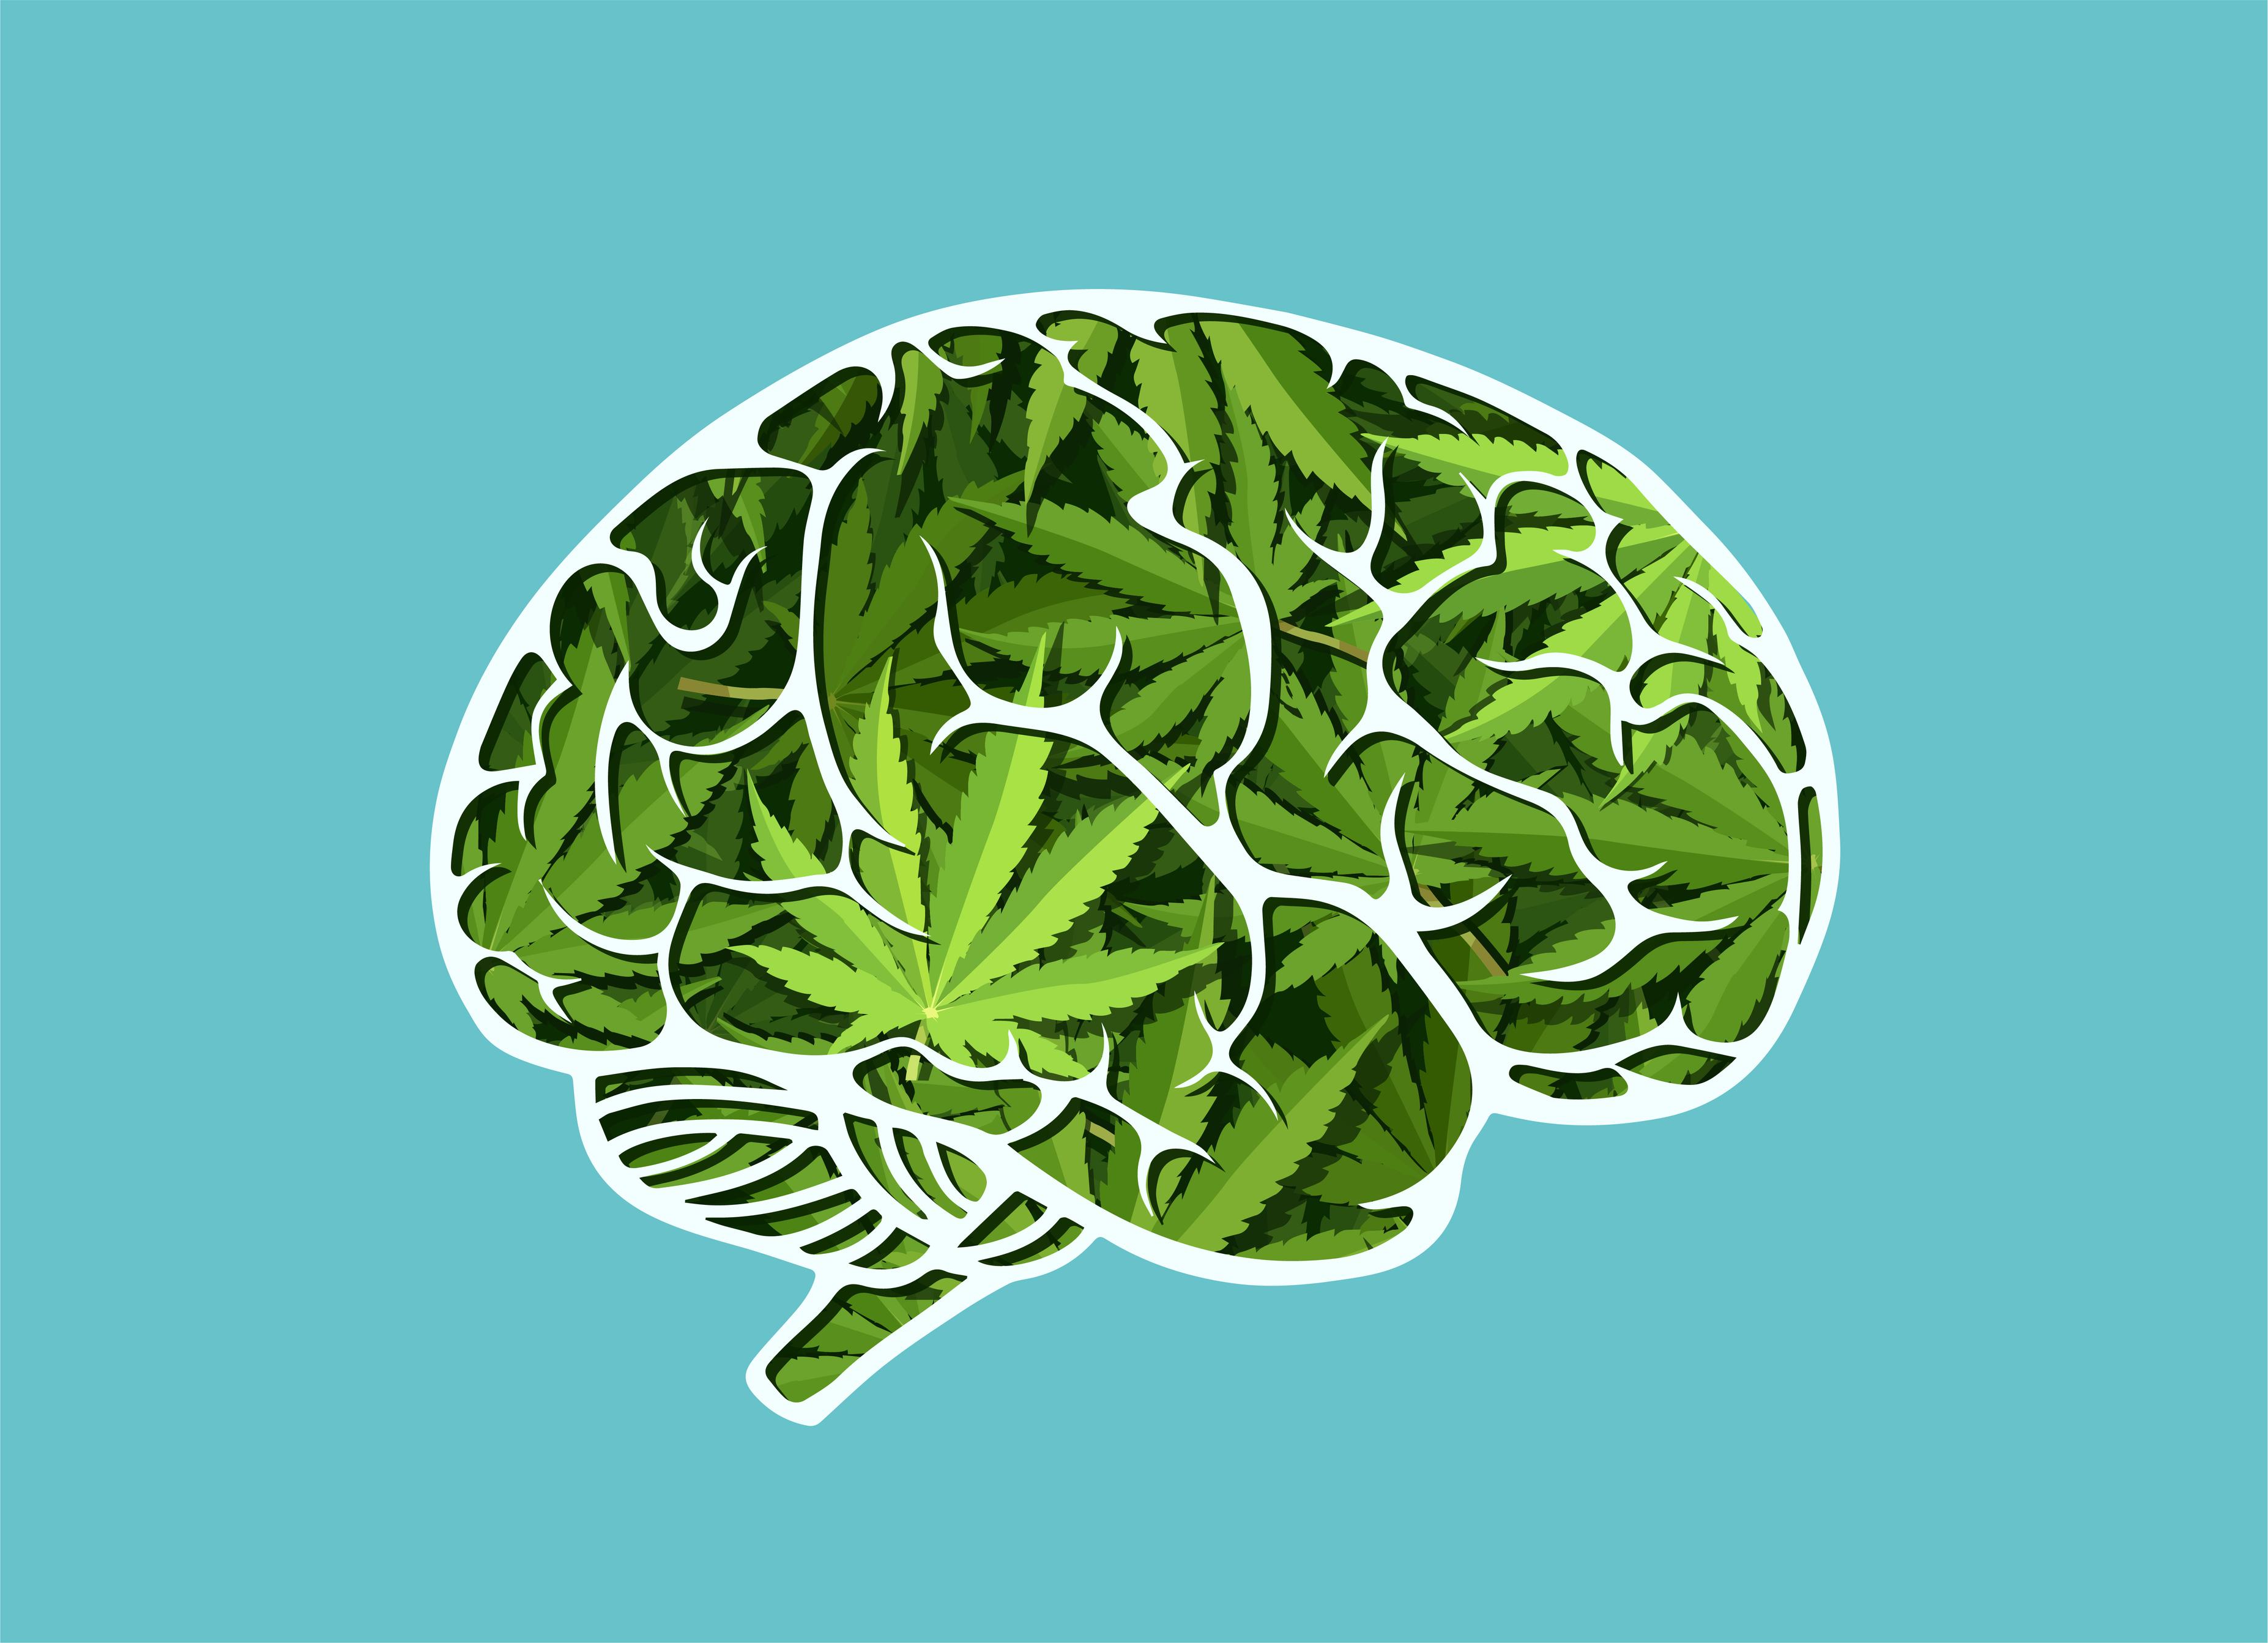 Inside the Endocannabinoid System: UC-Irvine Professor Speaks on “The Brain’s Own Cannabis”